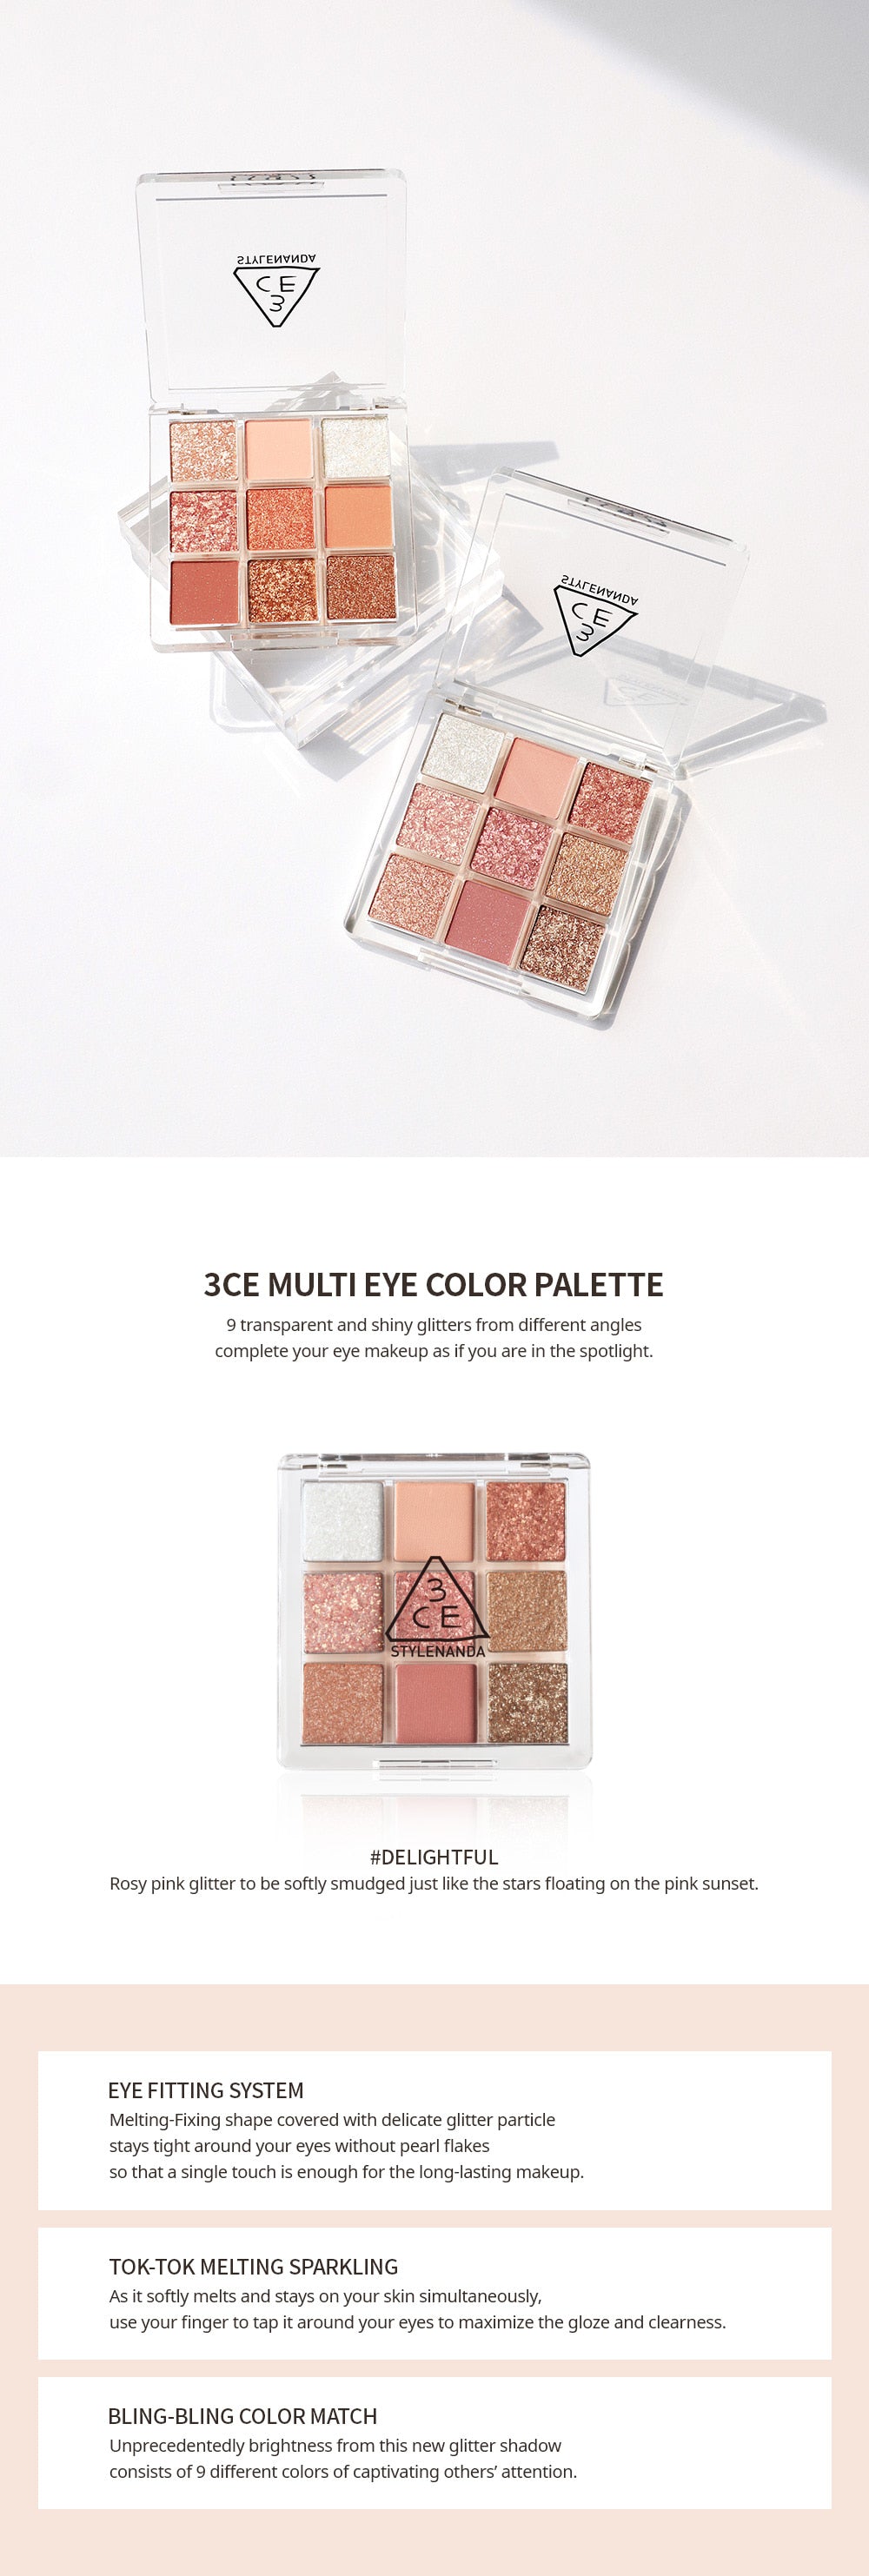 3CE Multi Eye Color Palette #Delightful